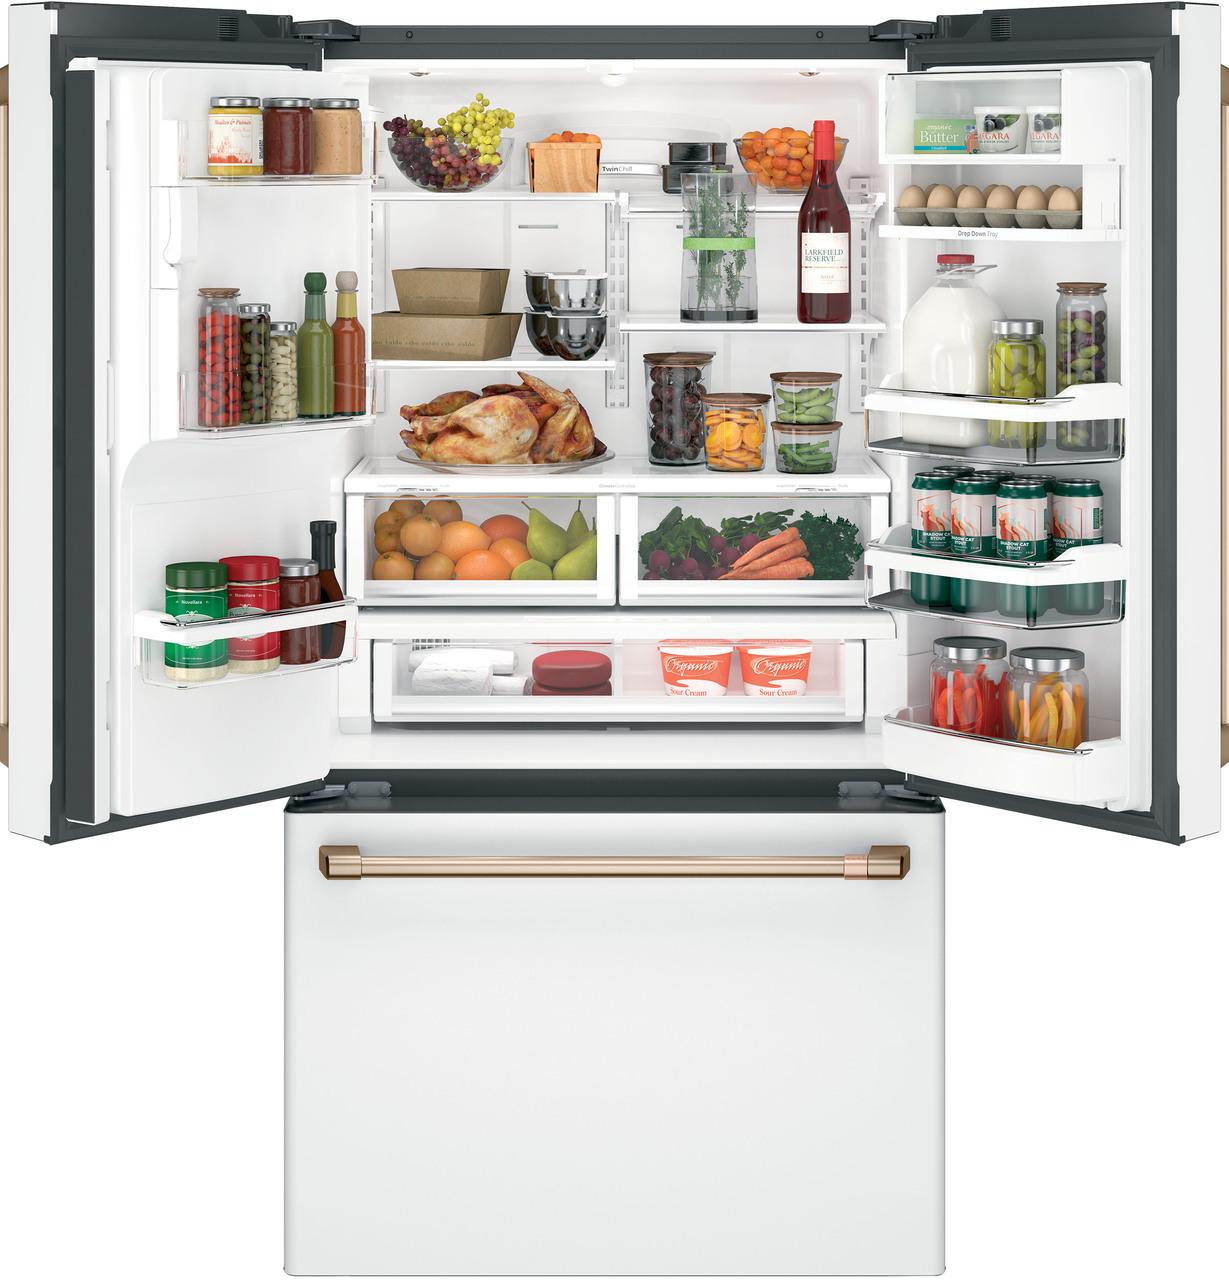 Cafe Caf(eback)™ ENERGY STAR® 22.1 Cu. Ft. Smart Counter-Depth French-Door Refrigerator with Hot Water Dispenser